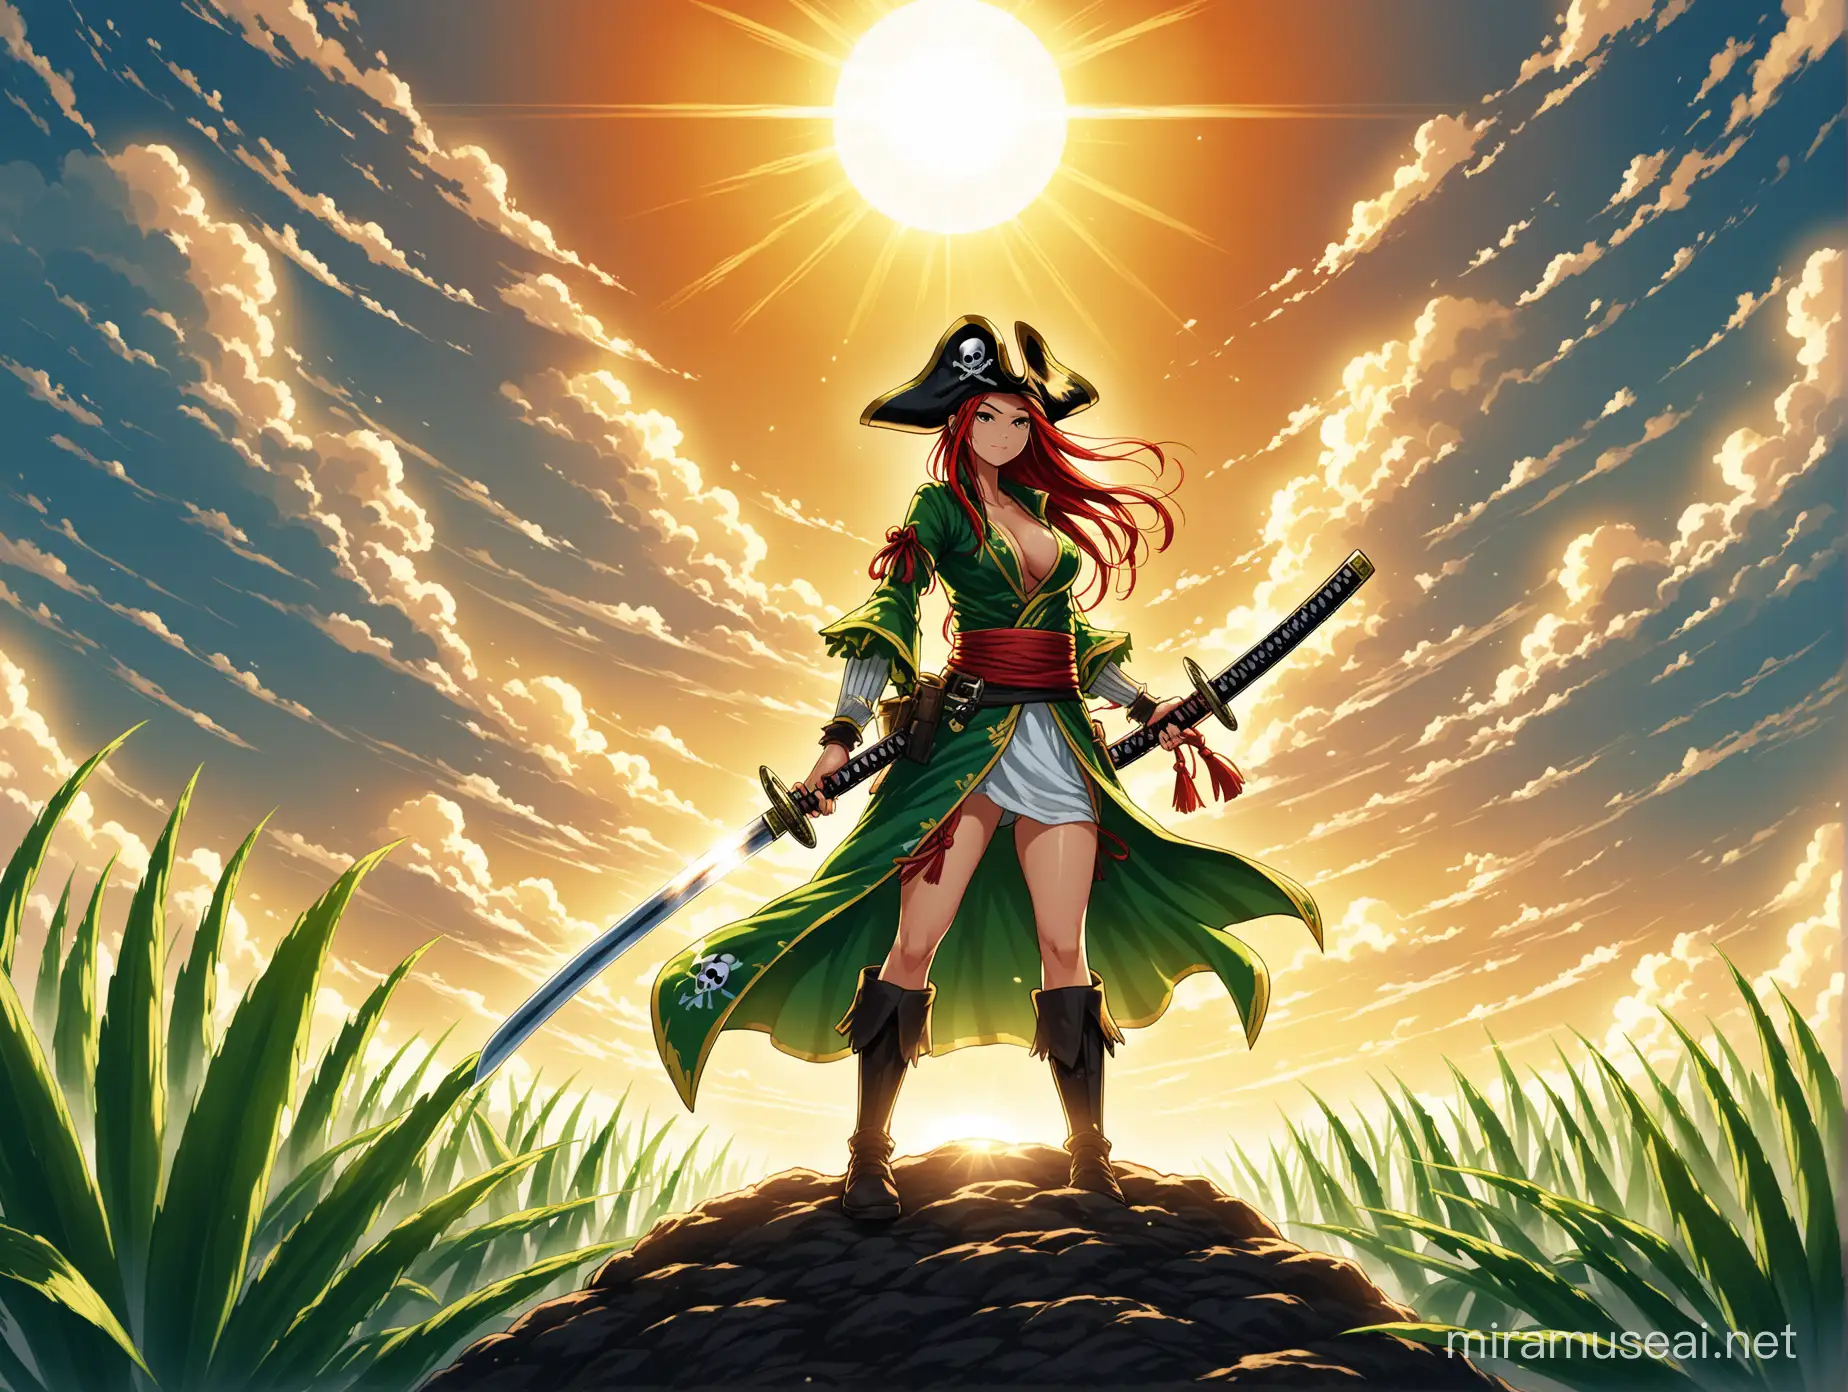 Graceful PlantWoman Warrior Defends Against Pirate Attack Under Sunlit Sky